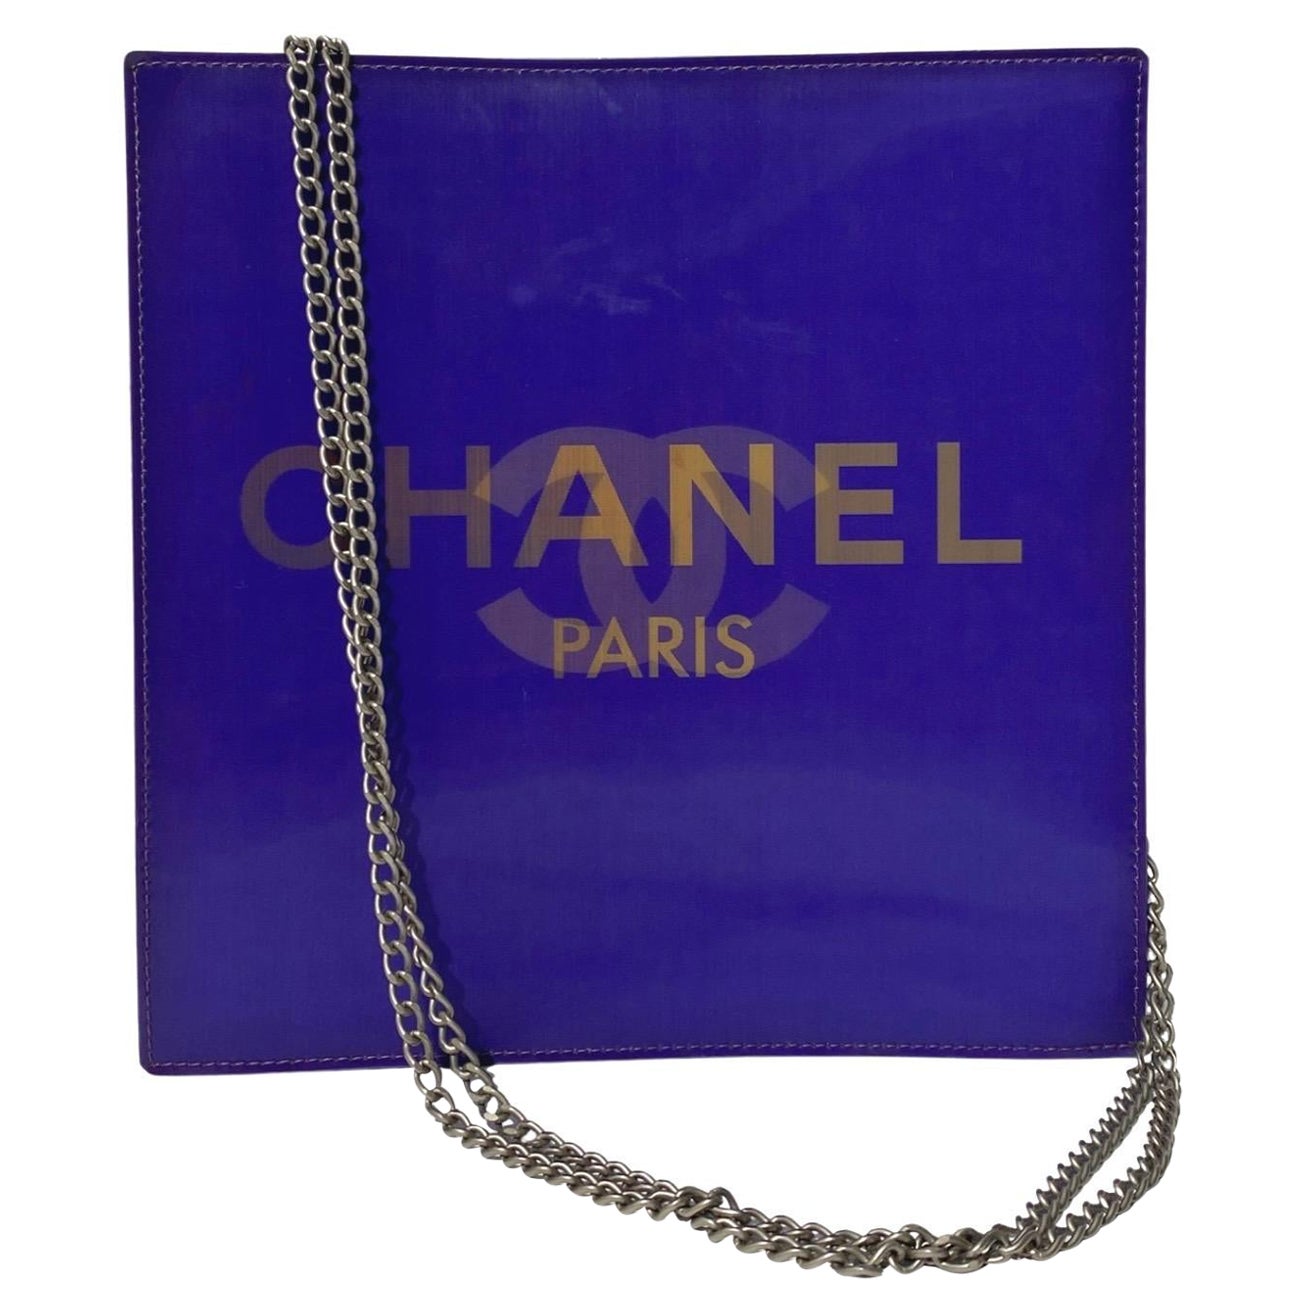 Chanel 2001 Purple Holographic CC Logo Chain Tote Bag